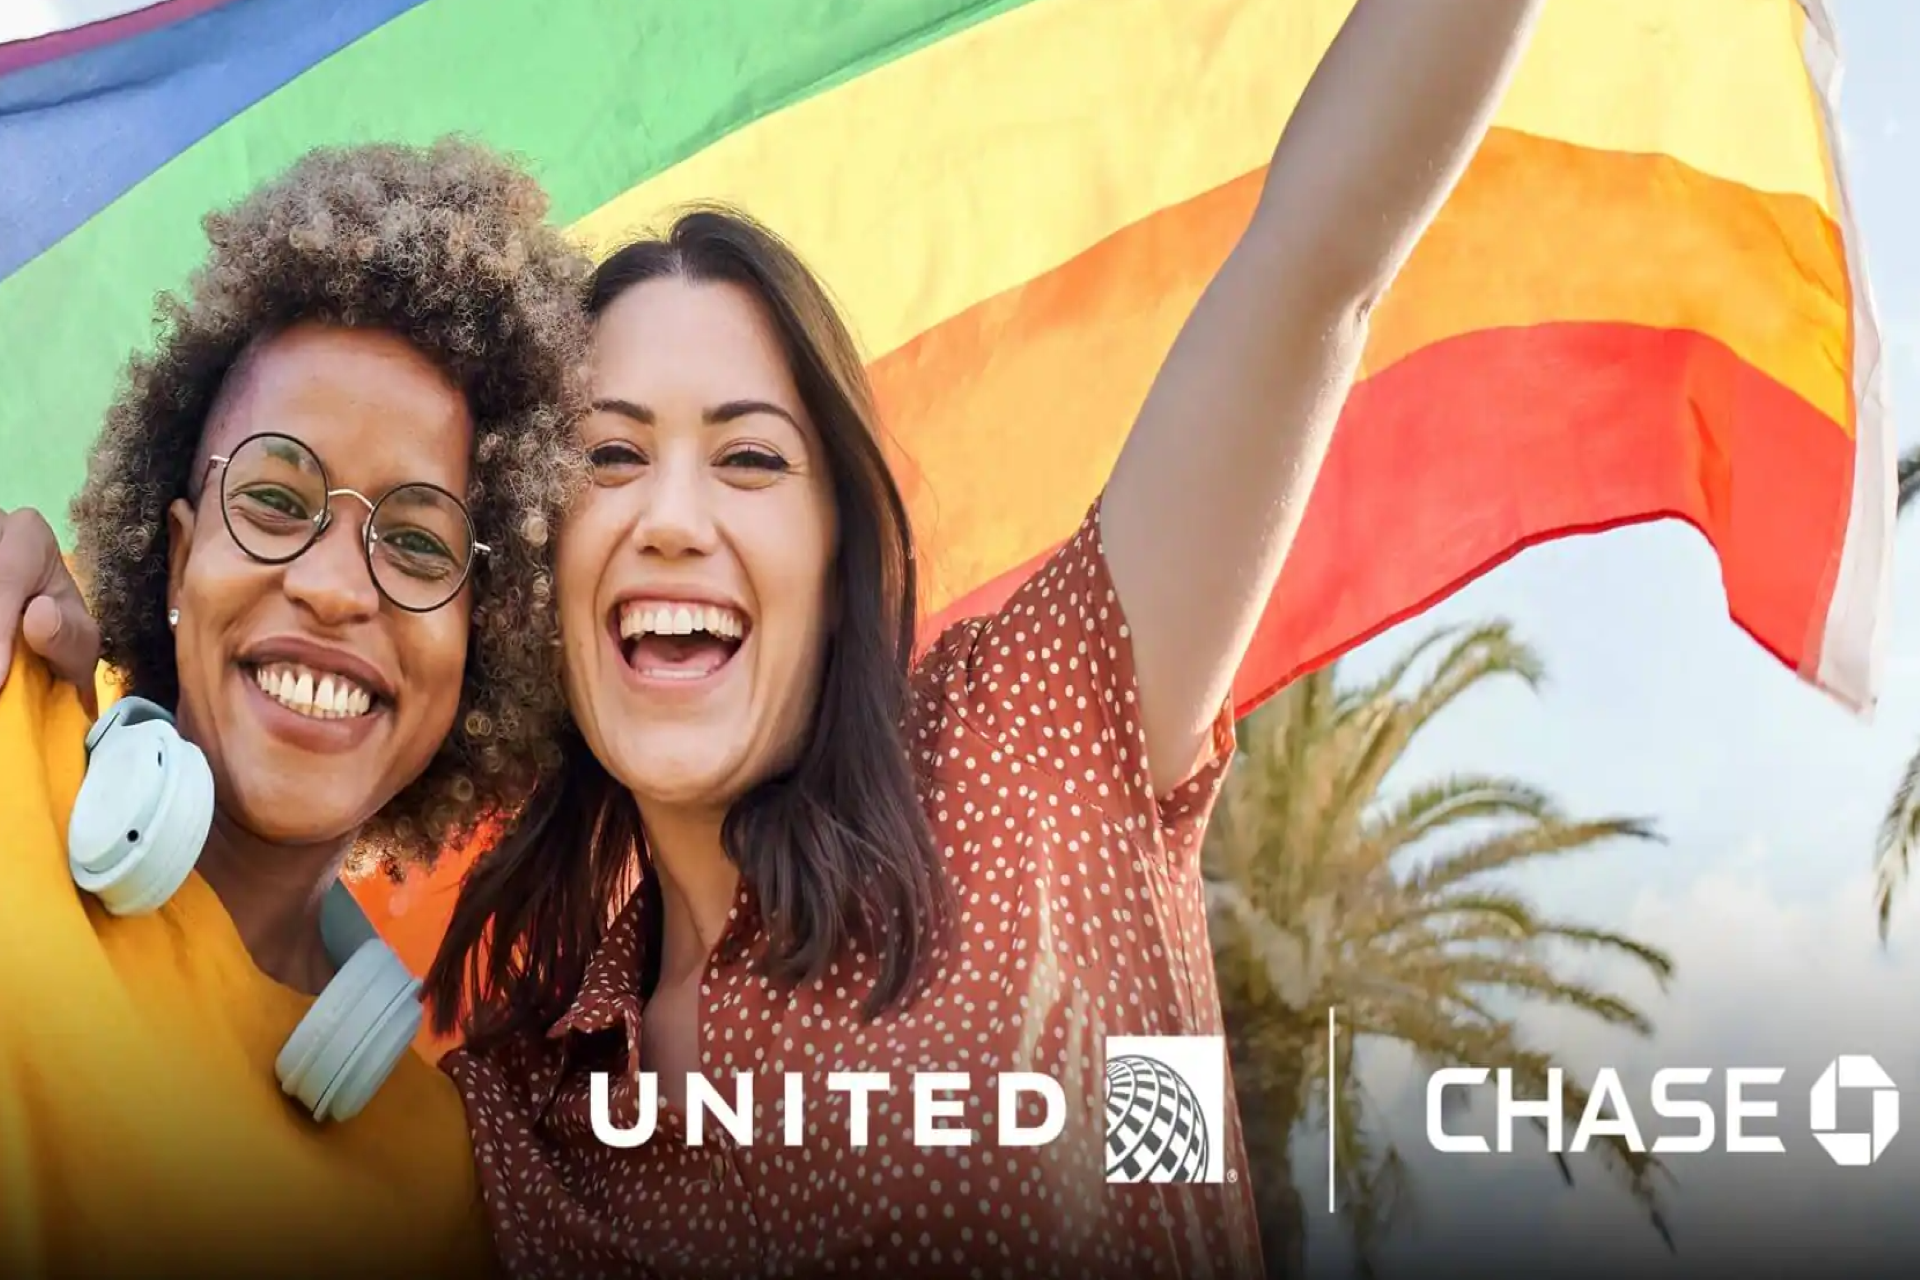 Chase, United MileagePlus Bonus for Pride Month